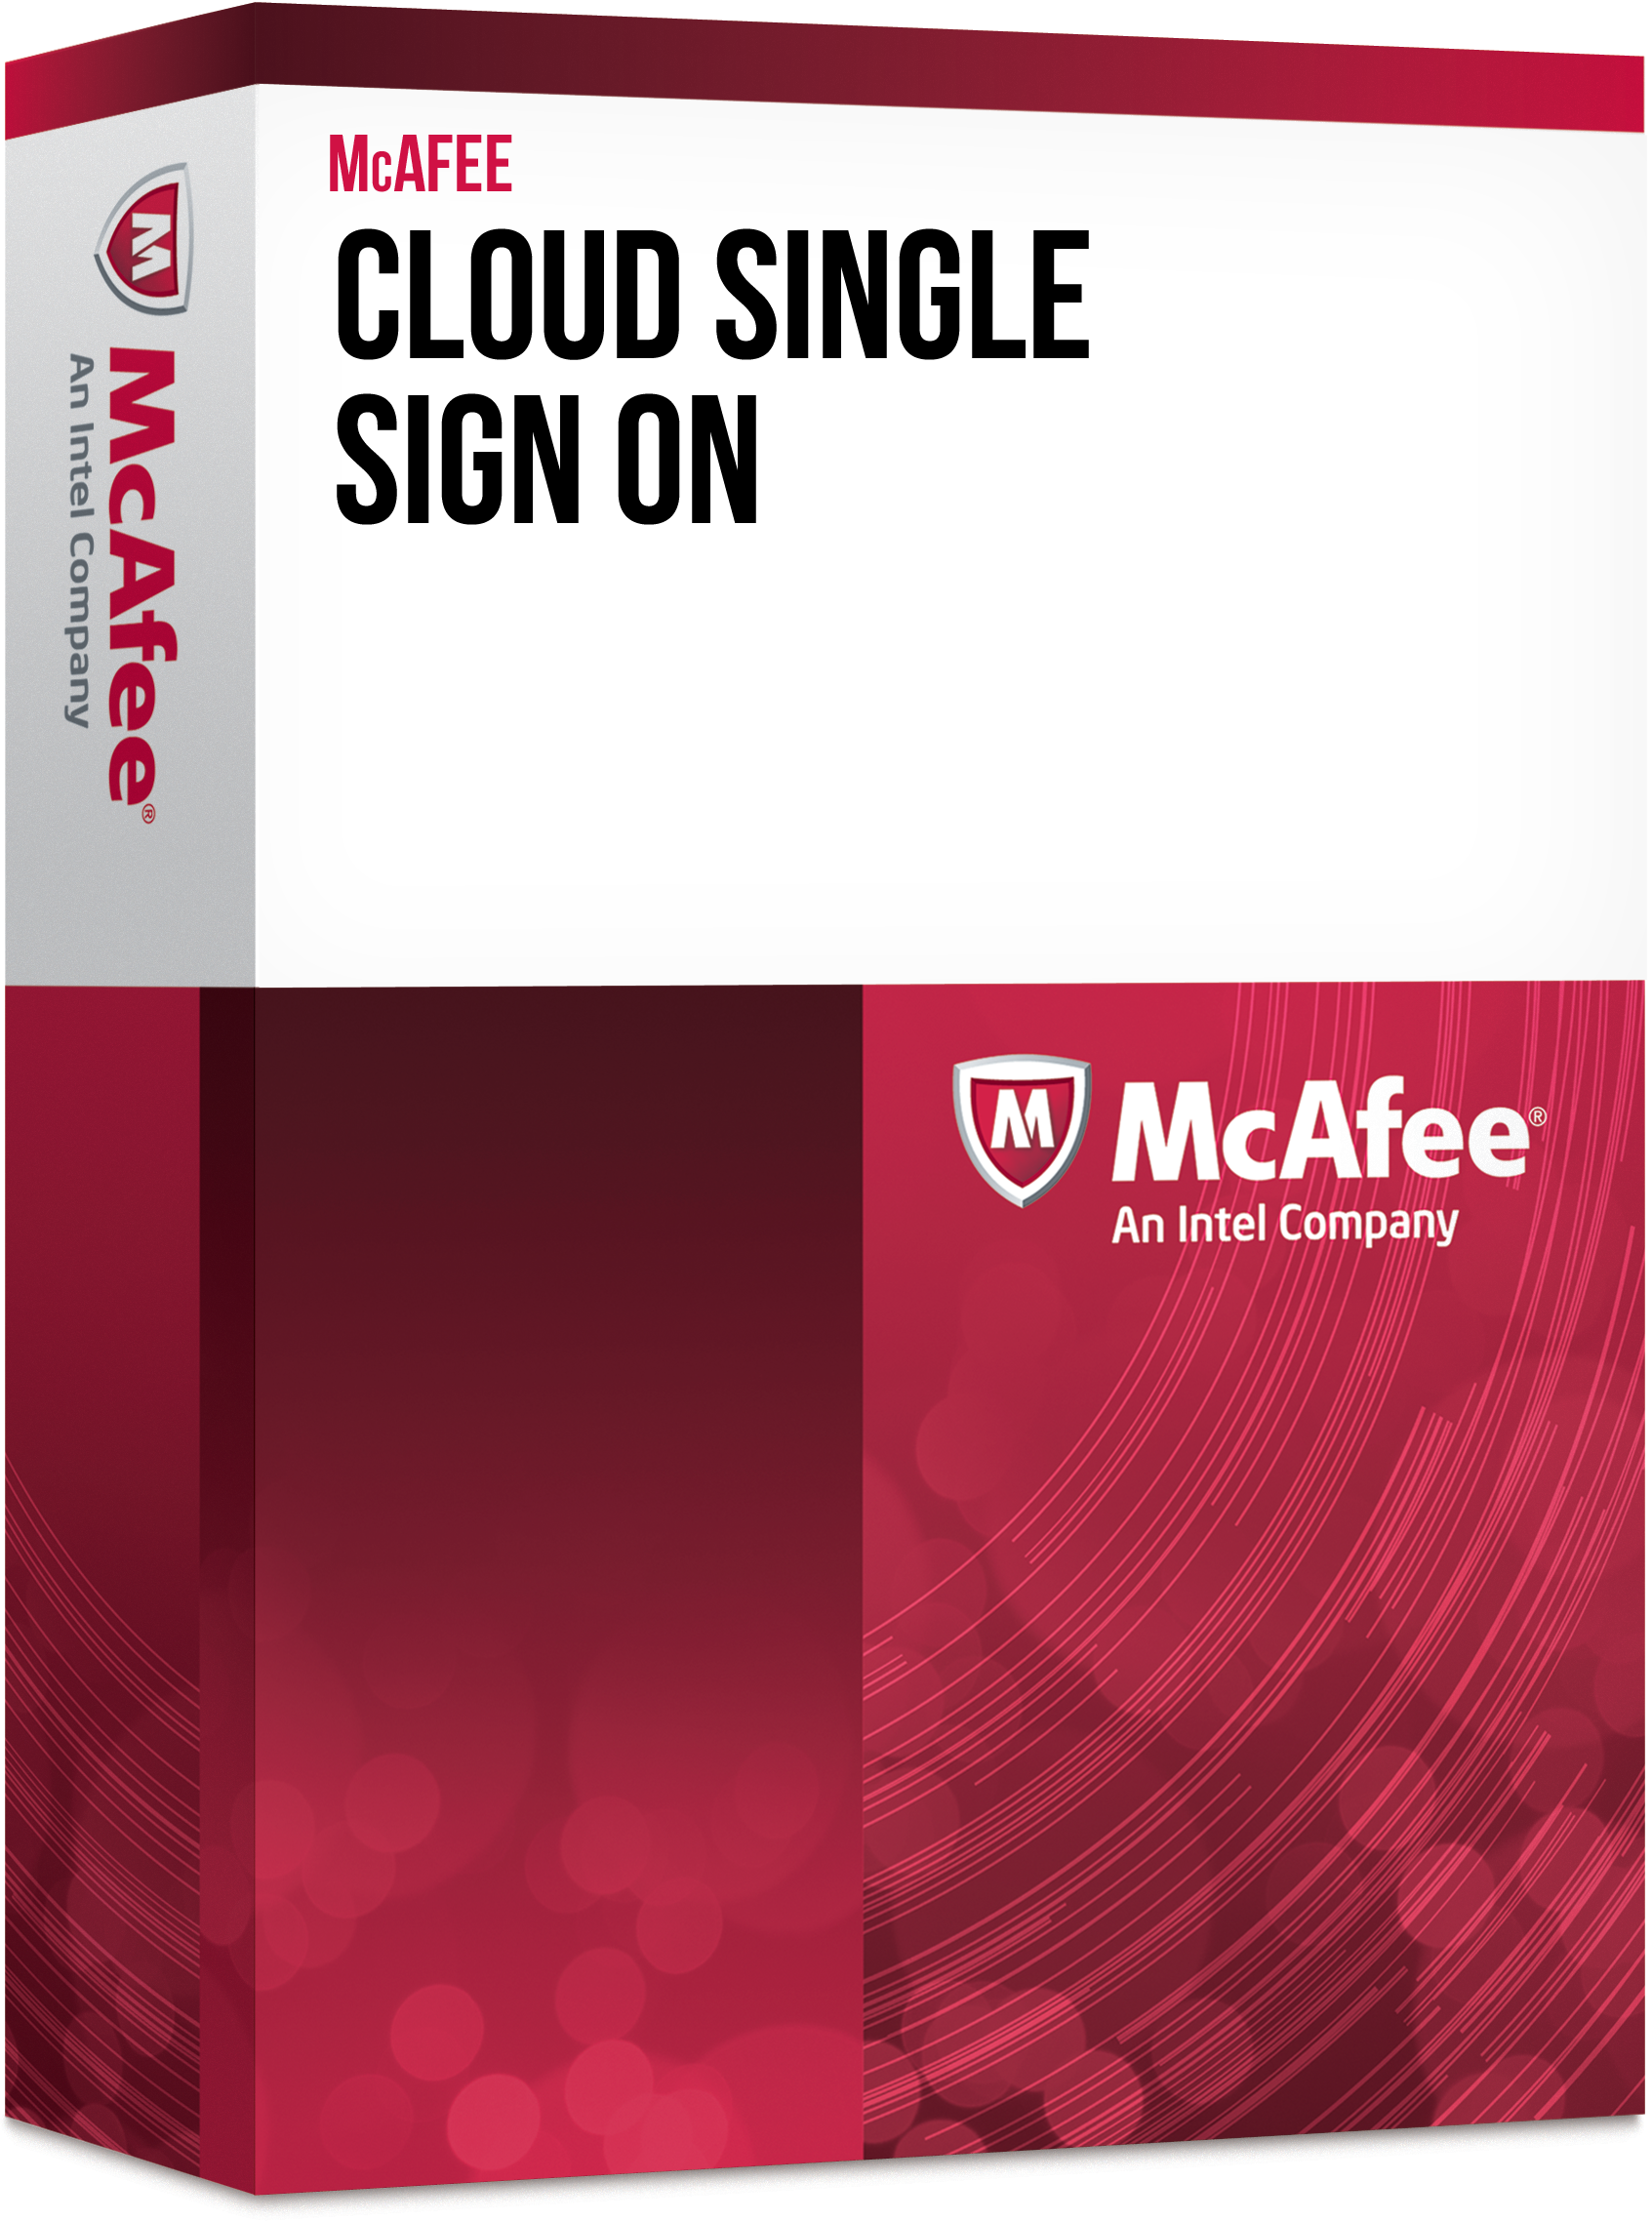 McAfee Cloud Single Sign On | McAfee Partner |